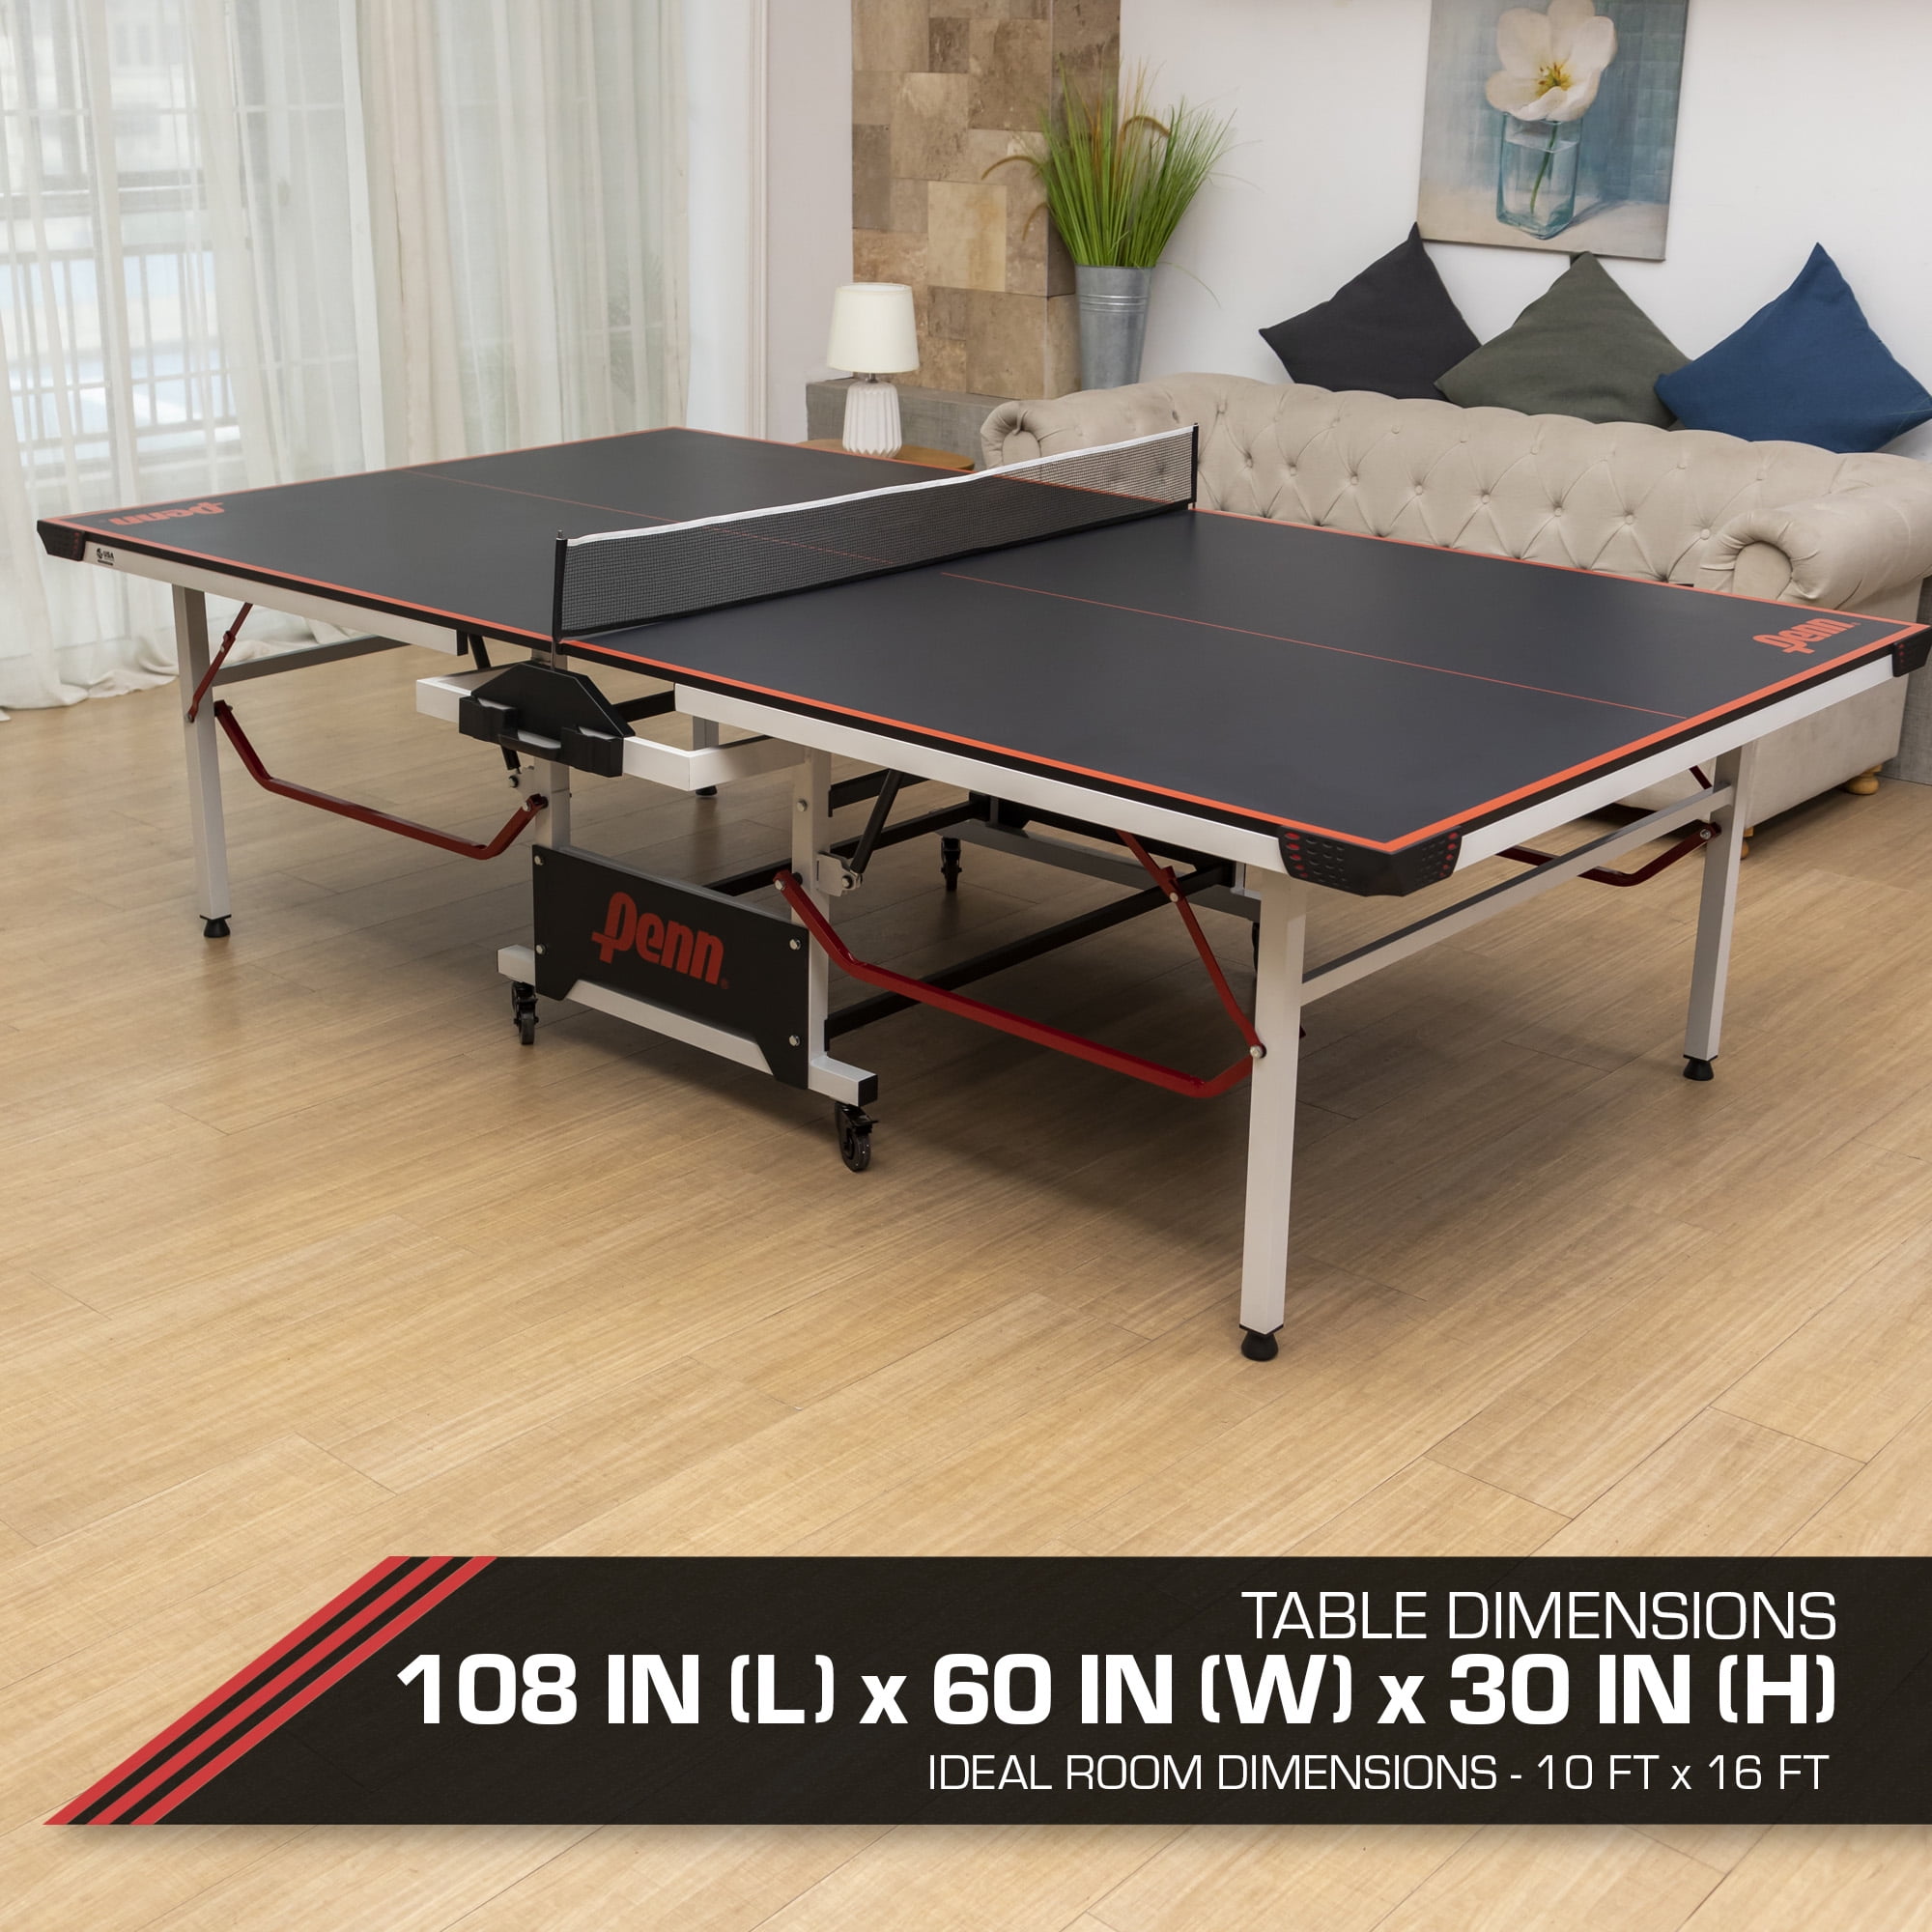 Volt Table Tennis Table